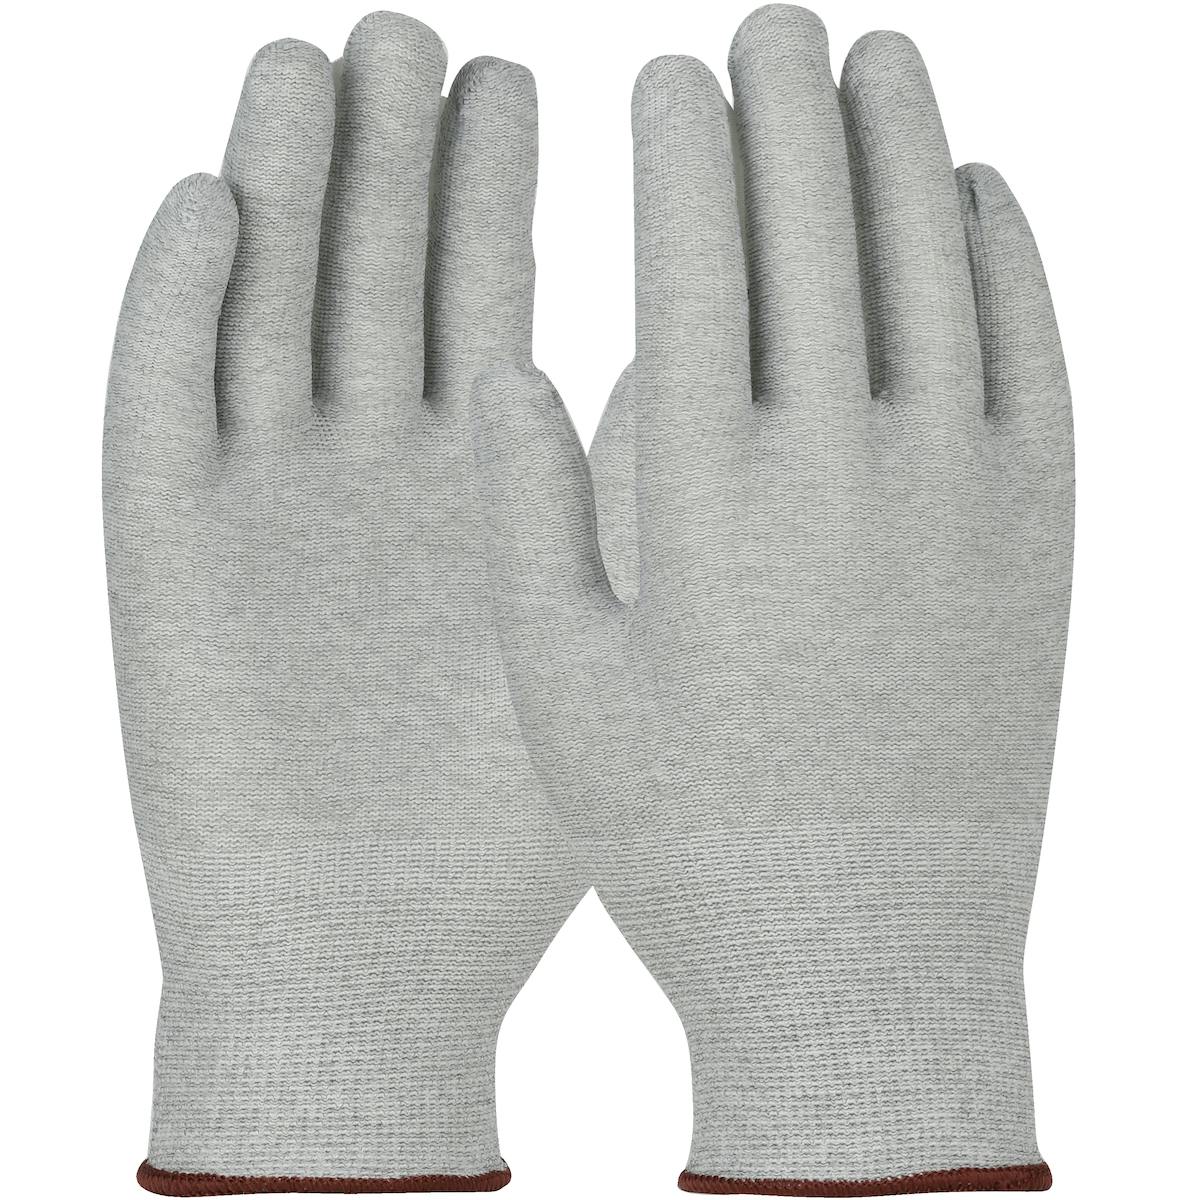 QRP® Qualaknit® Seamless Knit Nylon / Carbon Fiber Electrostatic Dissipative (ESD) Glove (KAS)